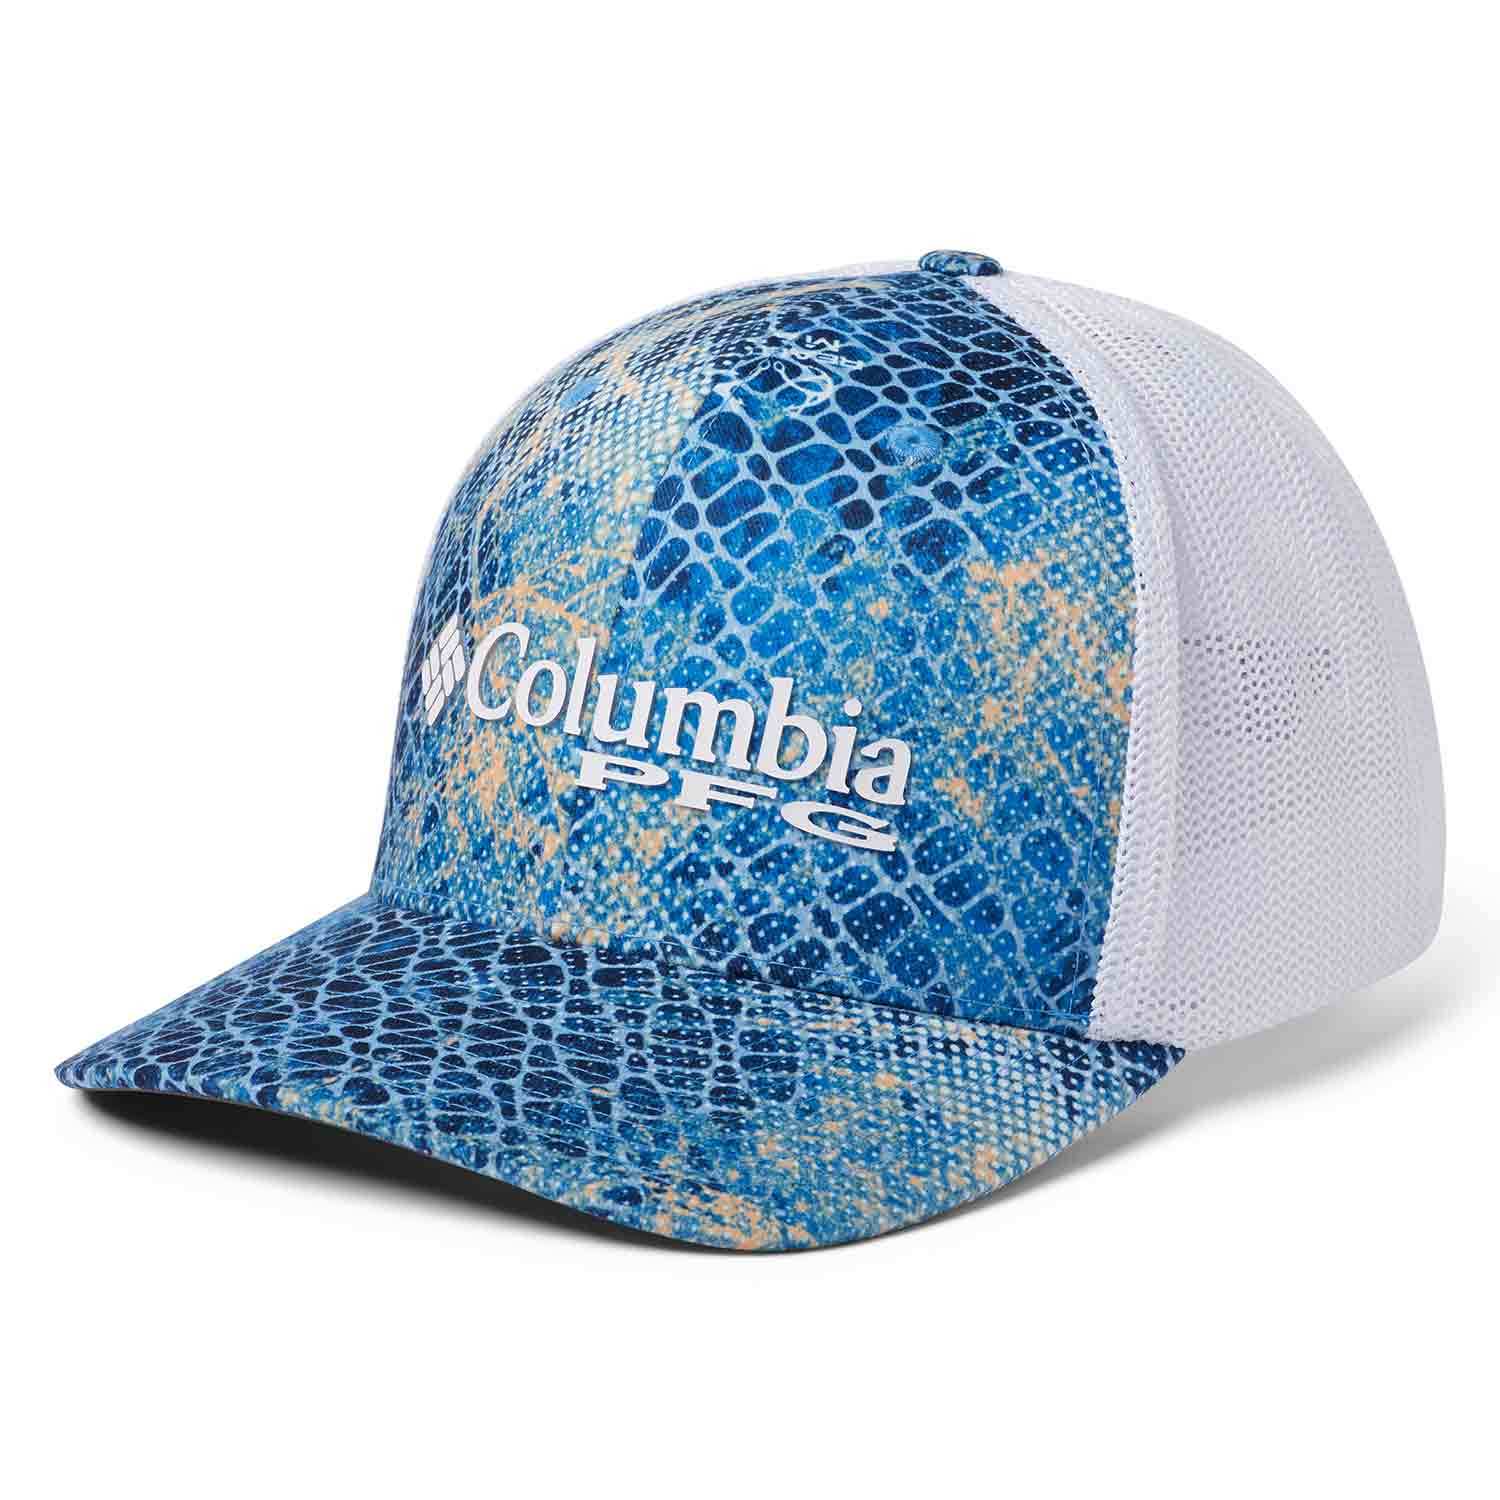 Gob Marlin Columbia Blue/White Hat